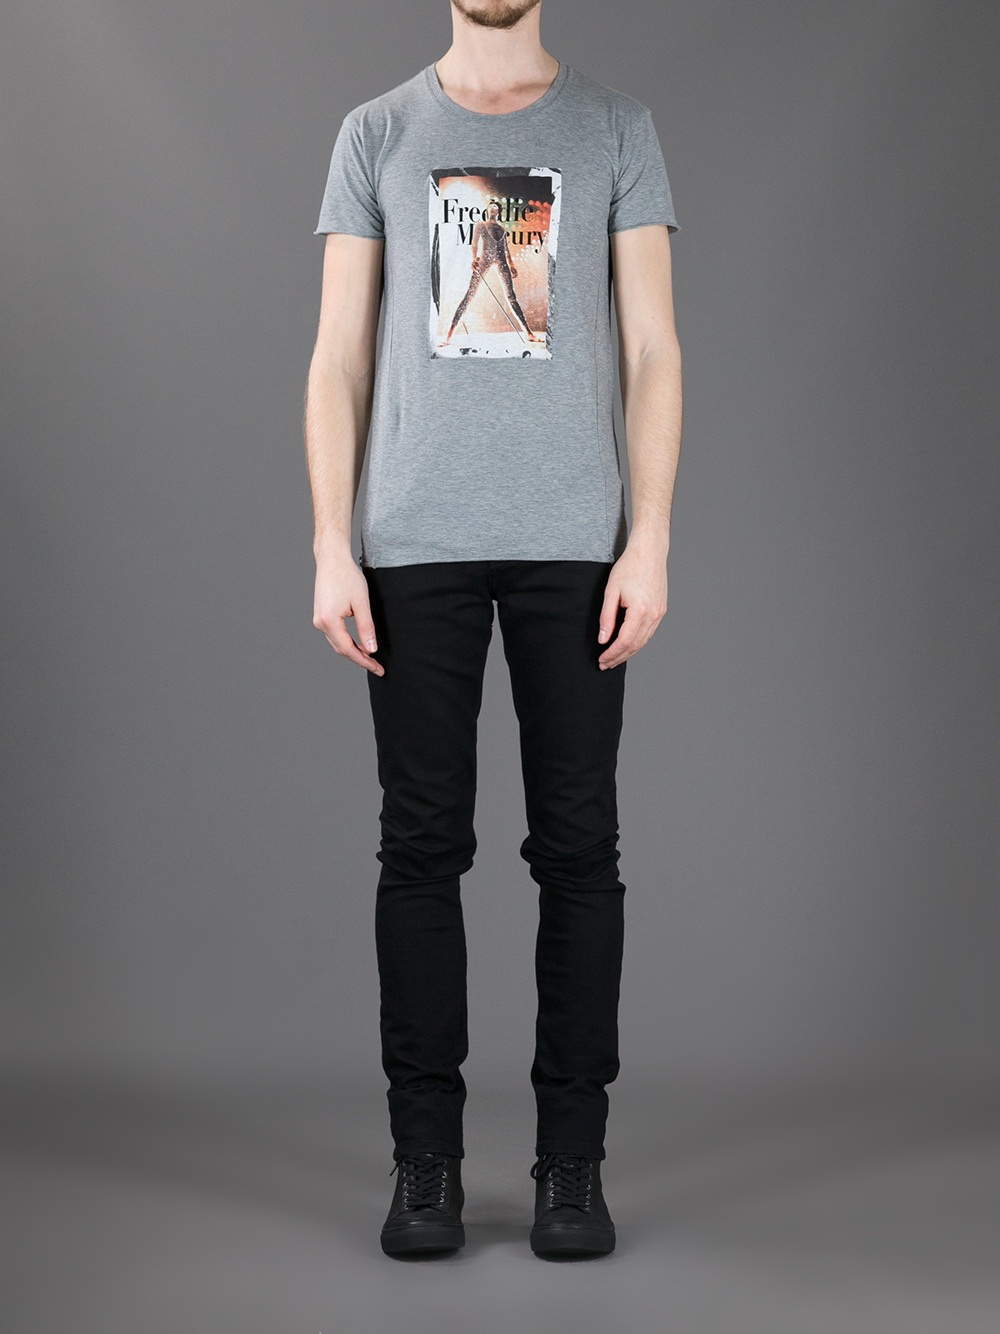 Dolce & Gabbana Freddie Mercury T-Shirt in Gray for Men | Lyst